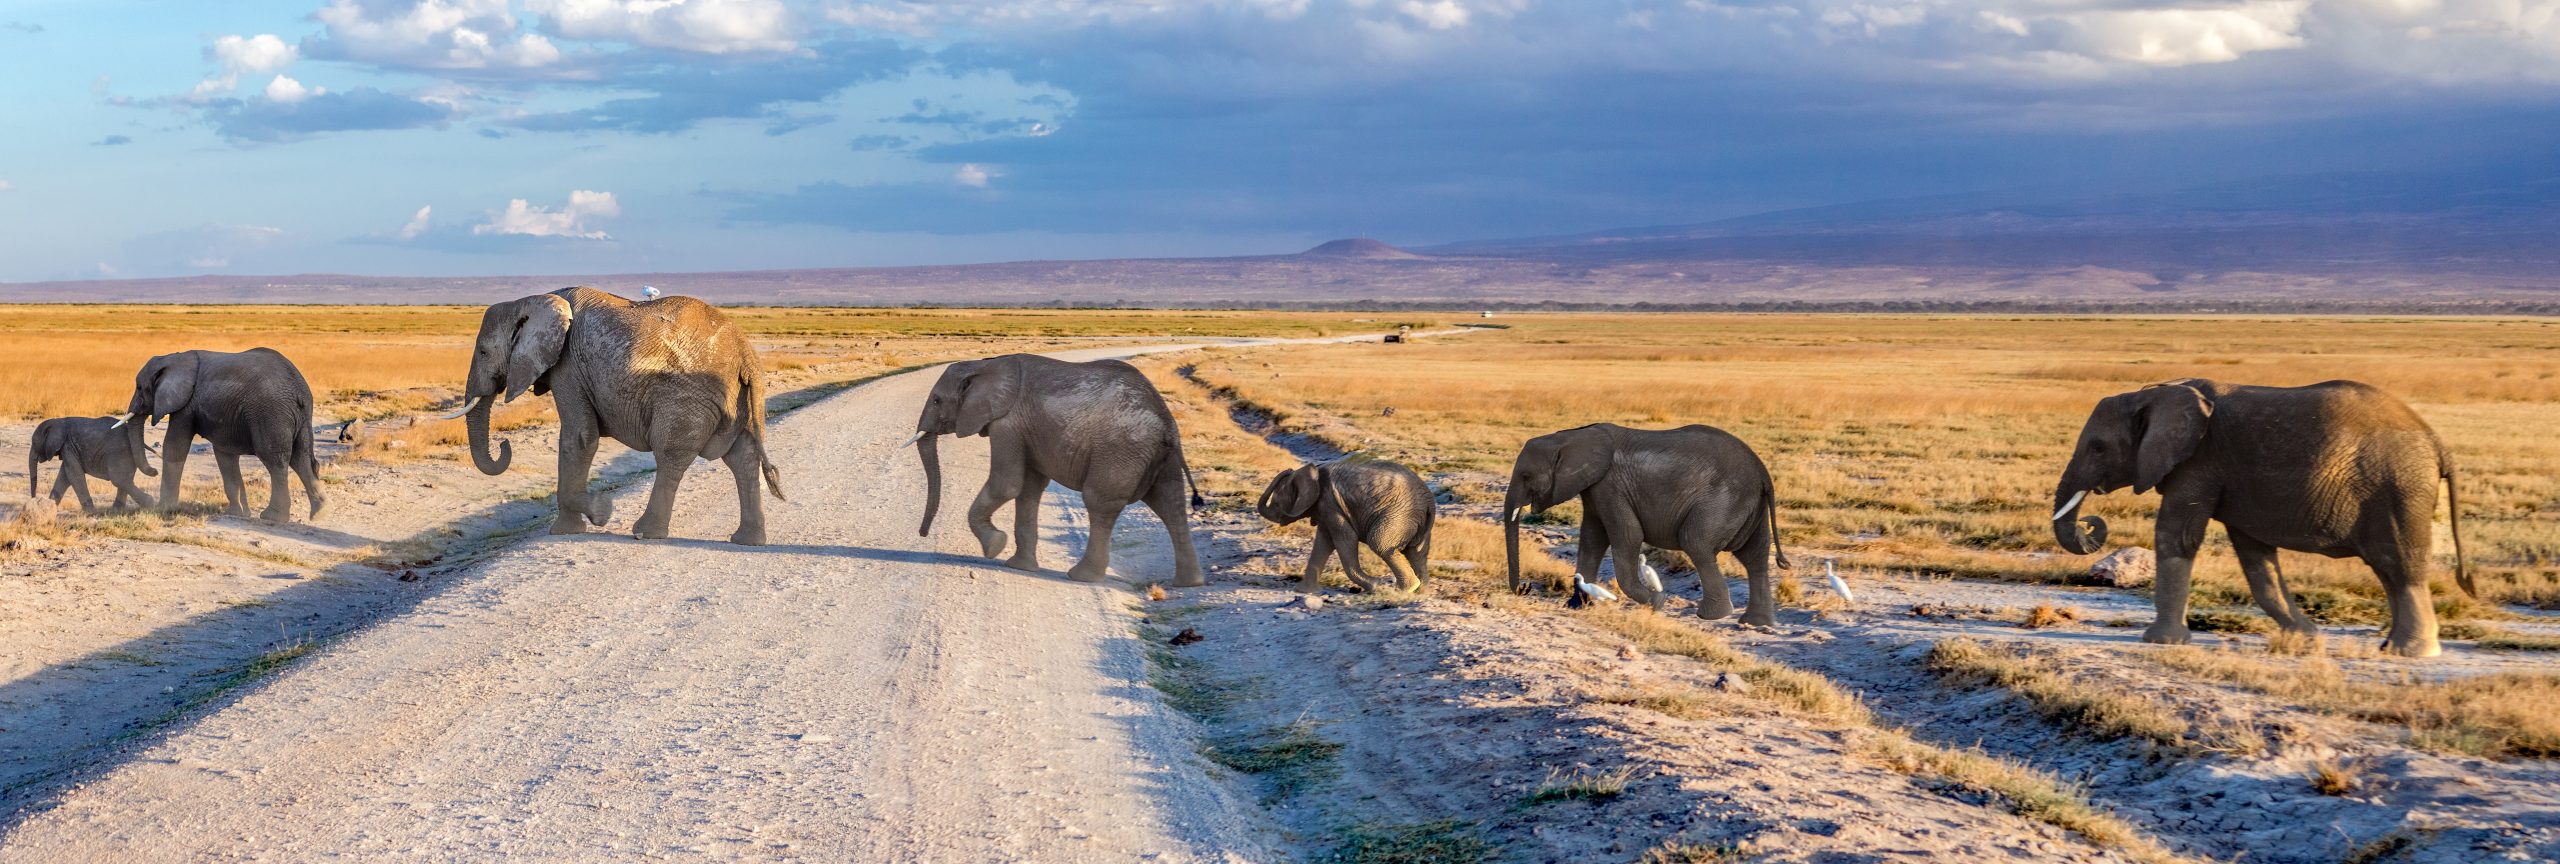 Zuid Afrika vakantie Krugerpark olifanten - De Planeet Reizen